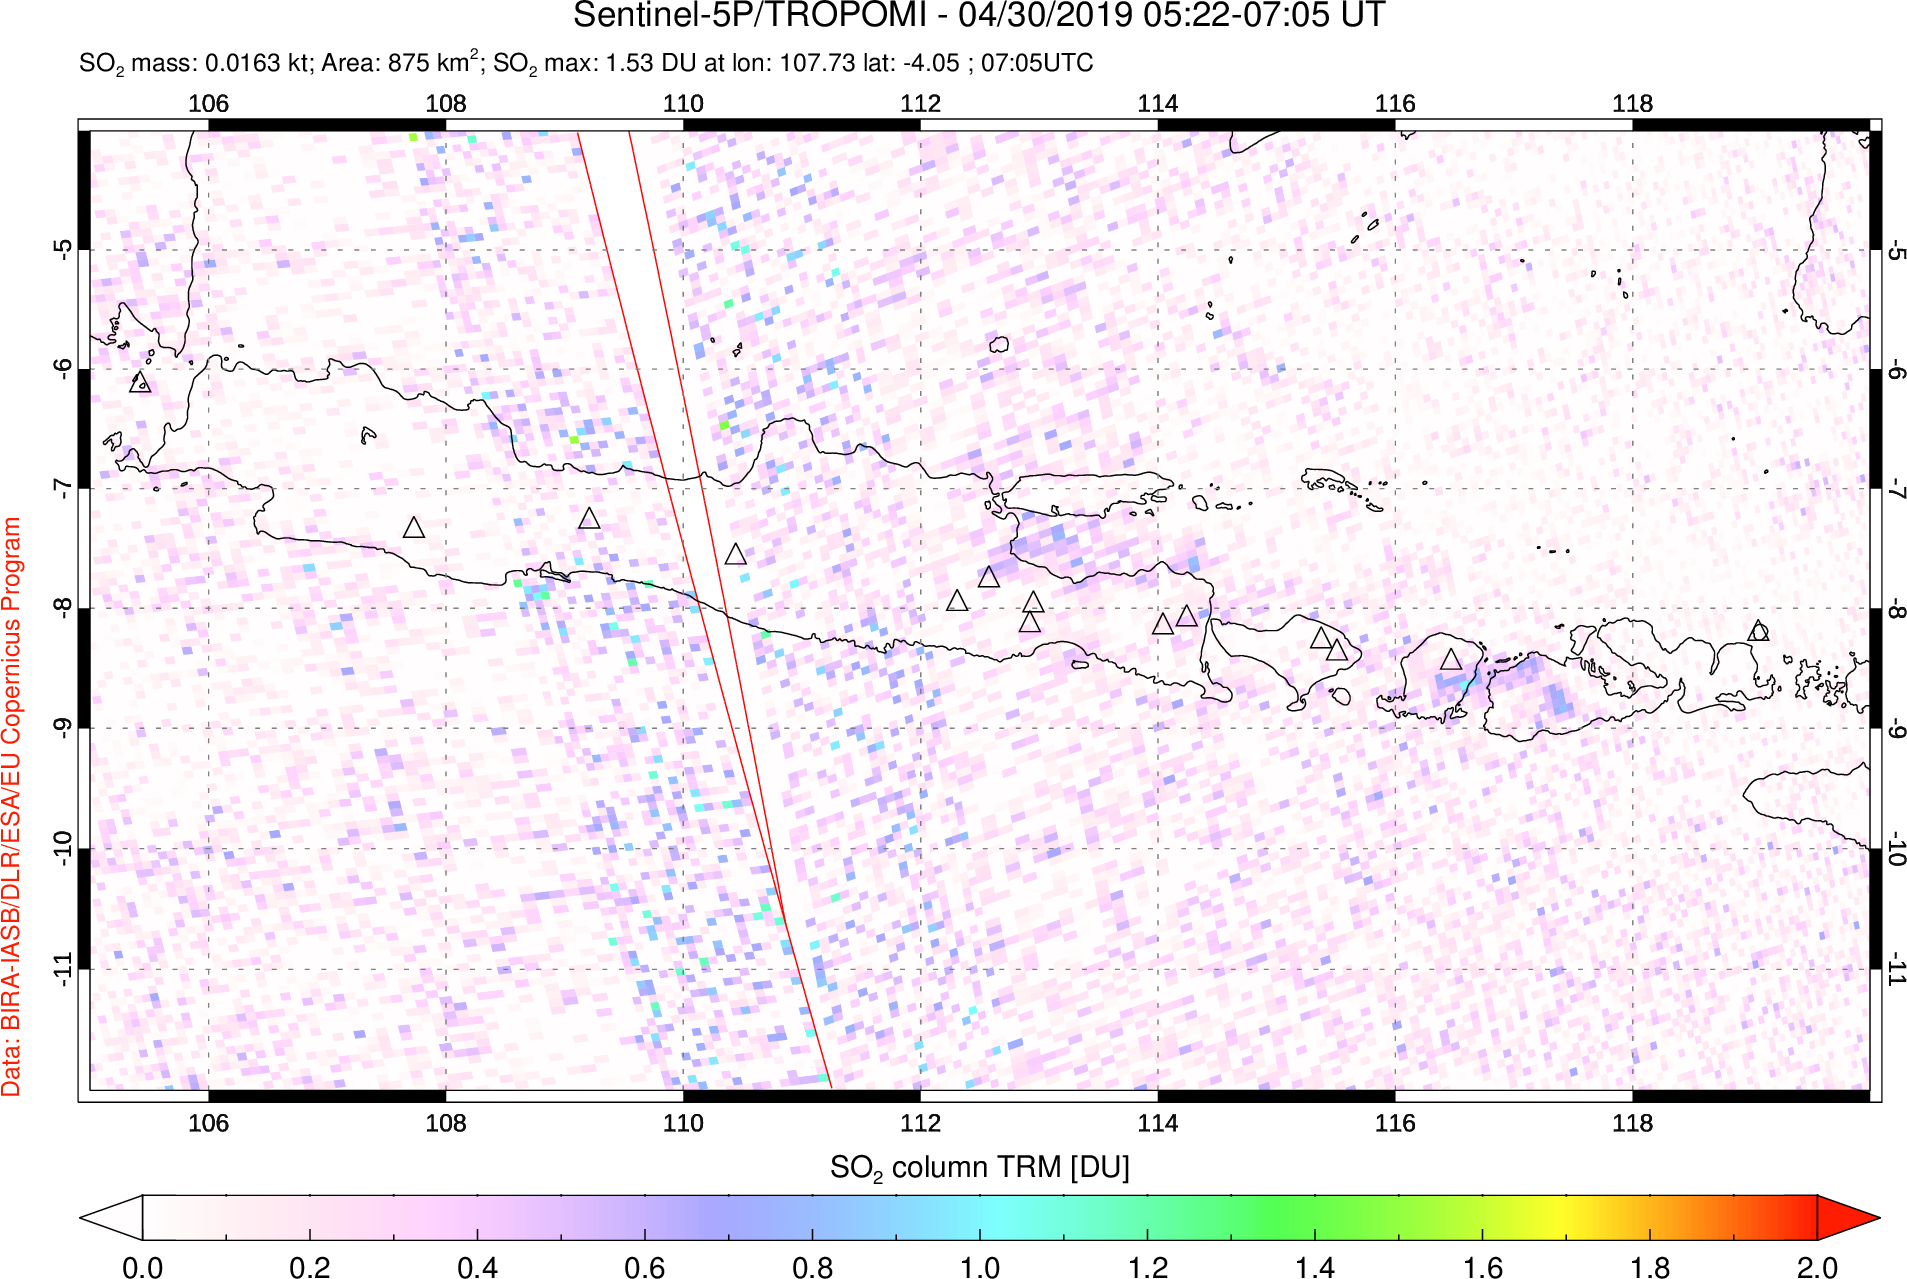 A sulfur dioxide image over Java, Indonesia on Apr 30, 2019.